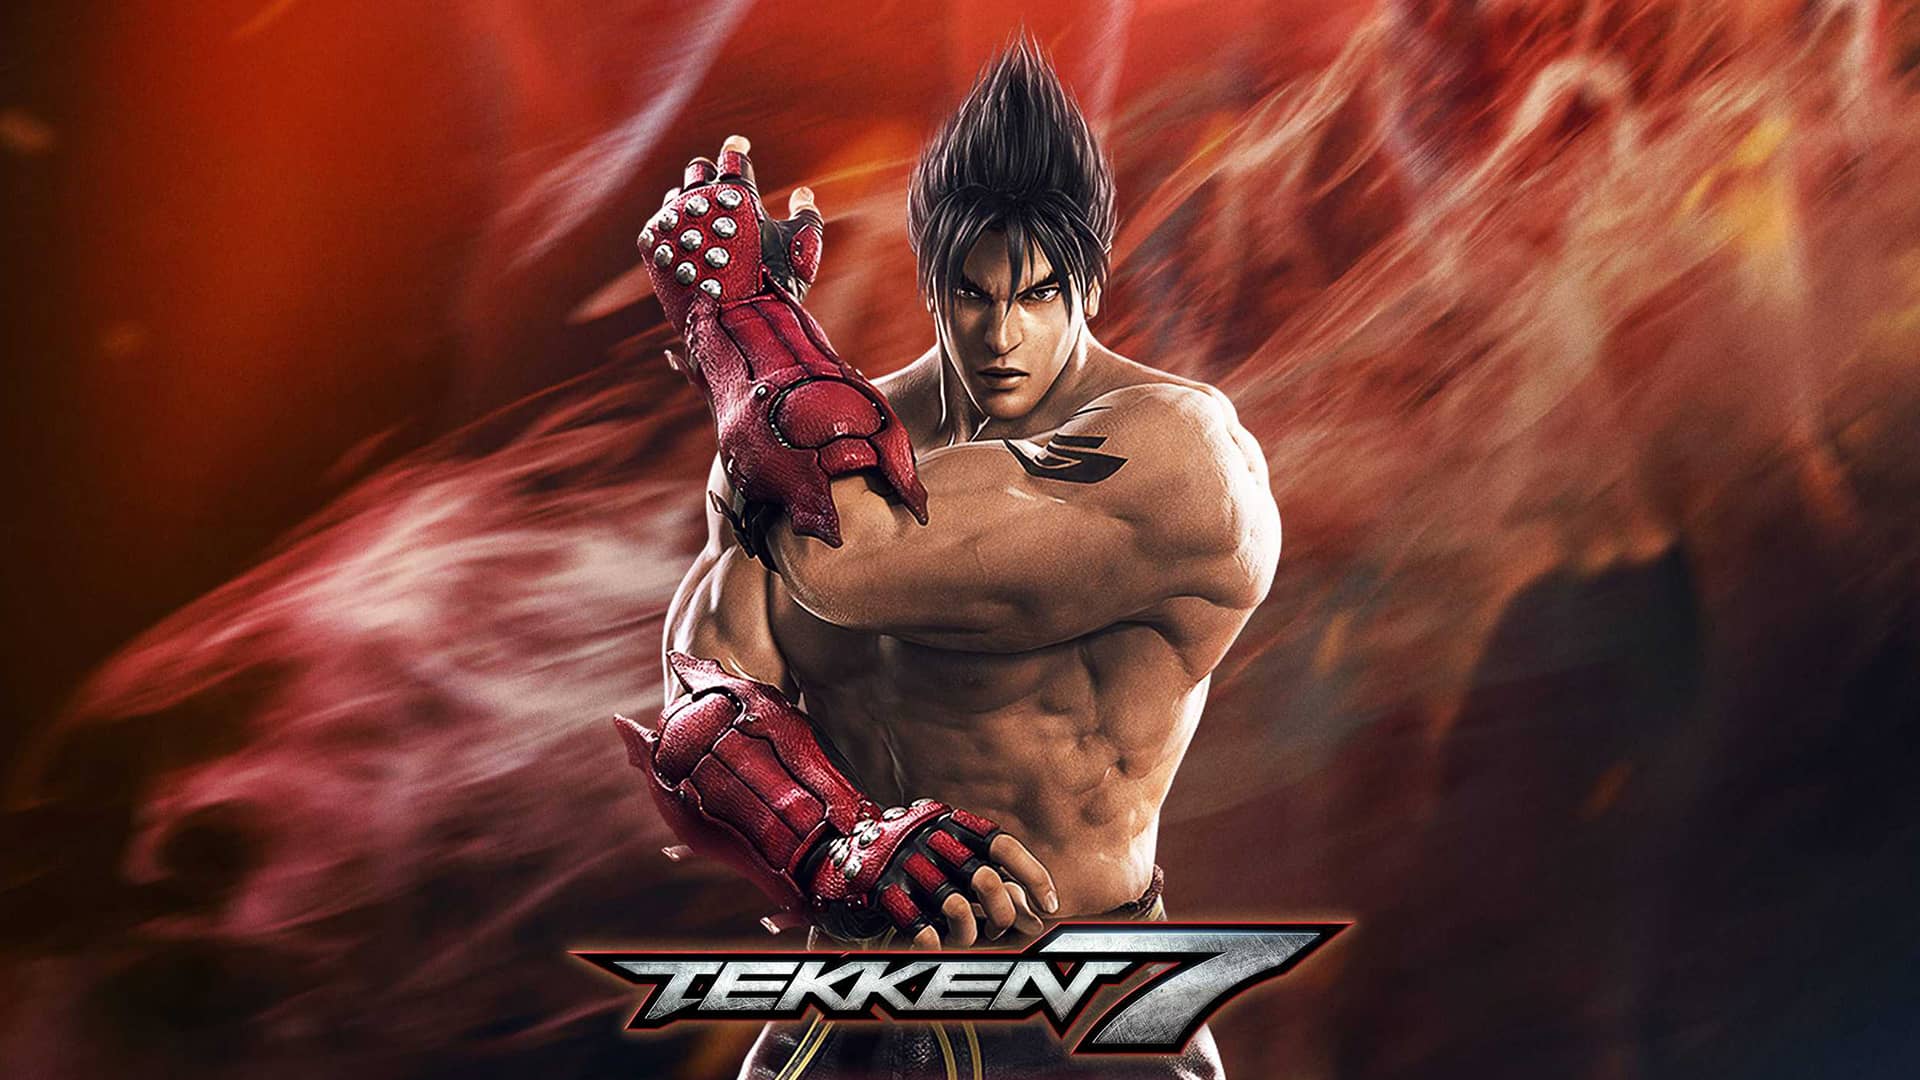 Tekken 7 Download za darmo